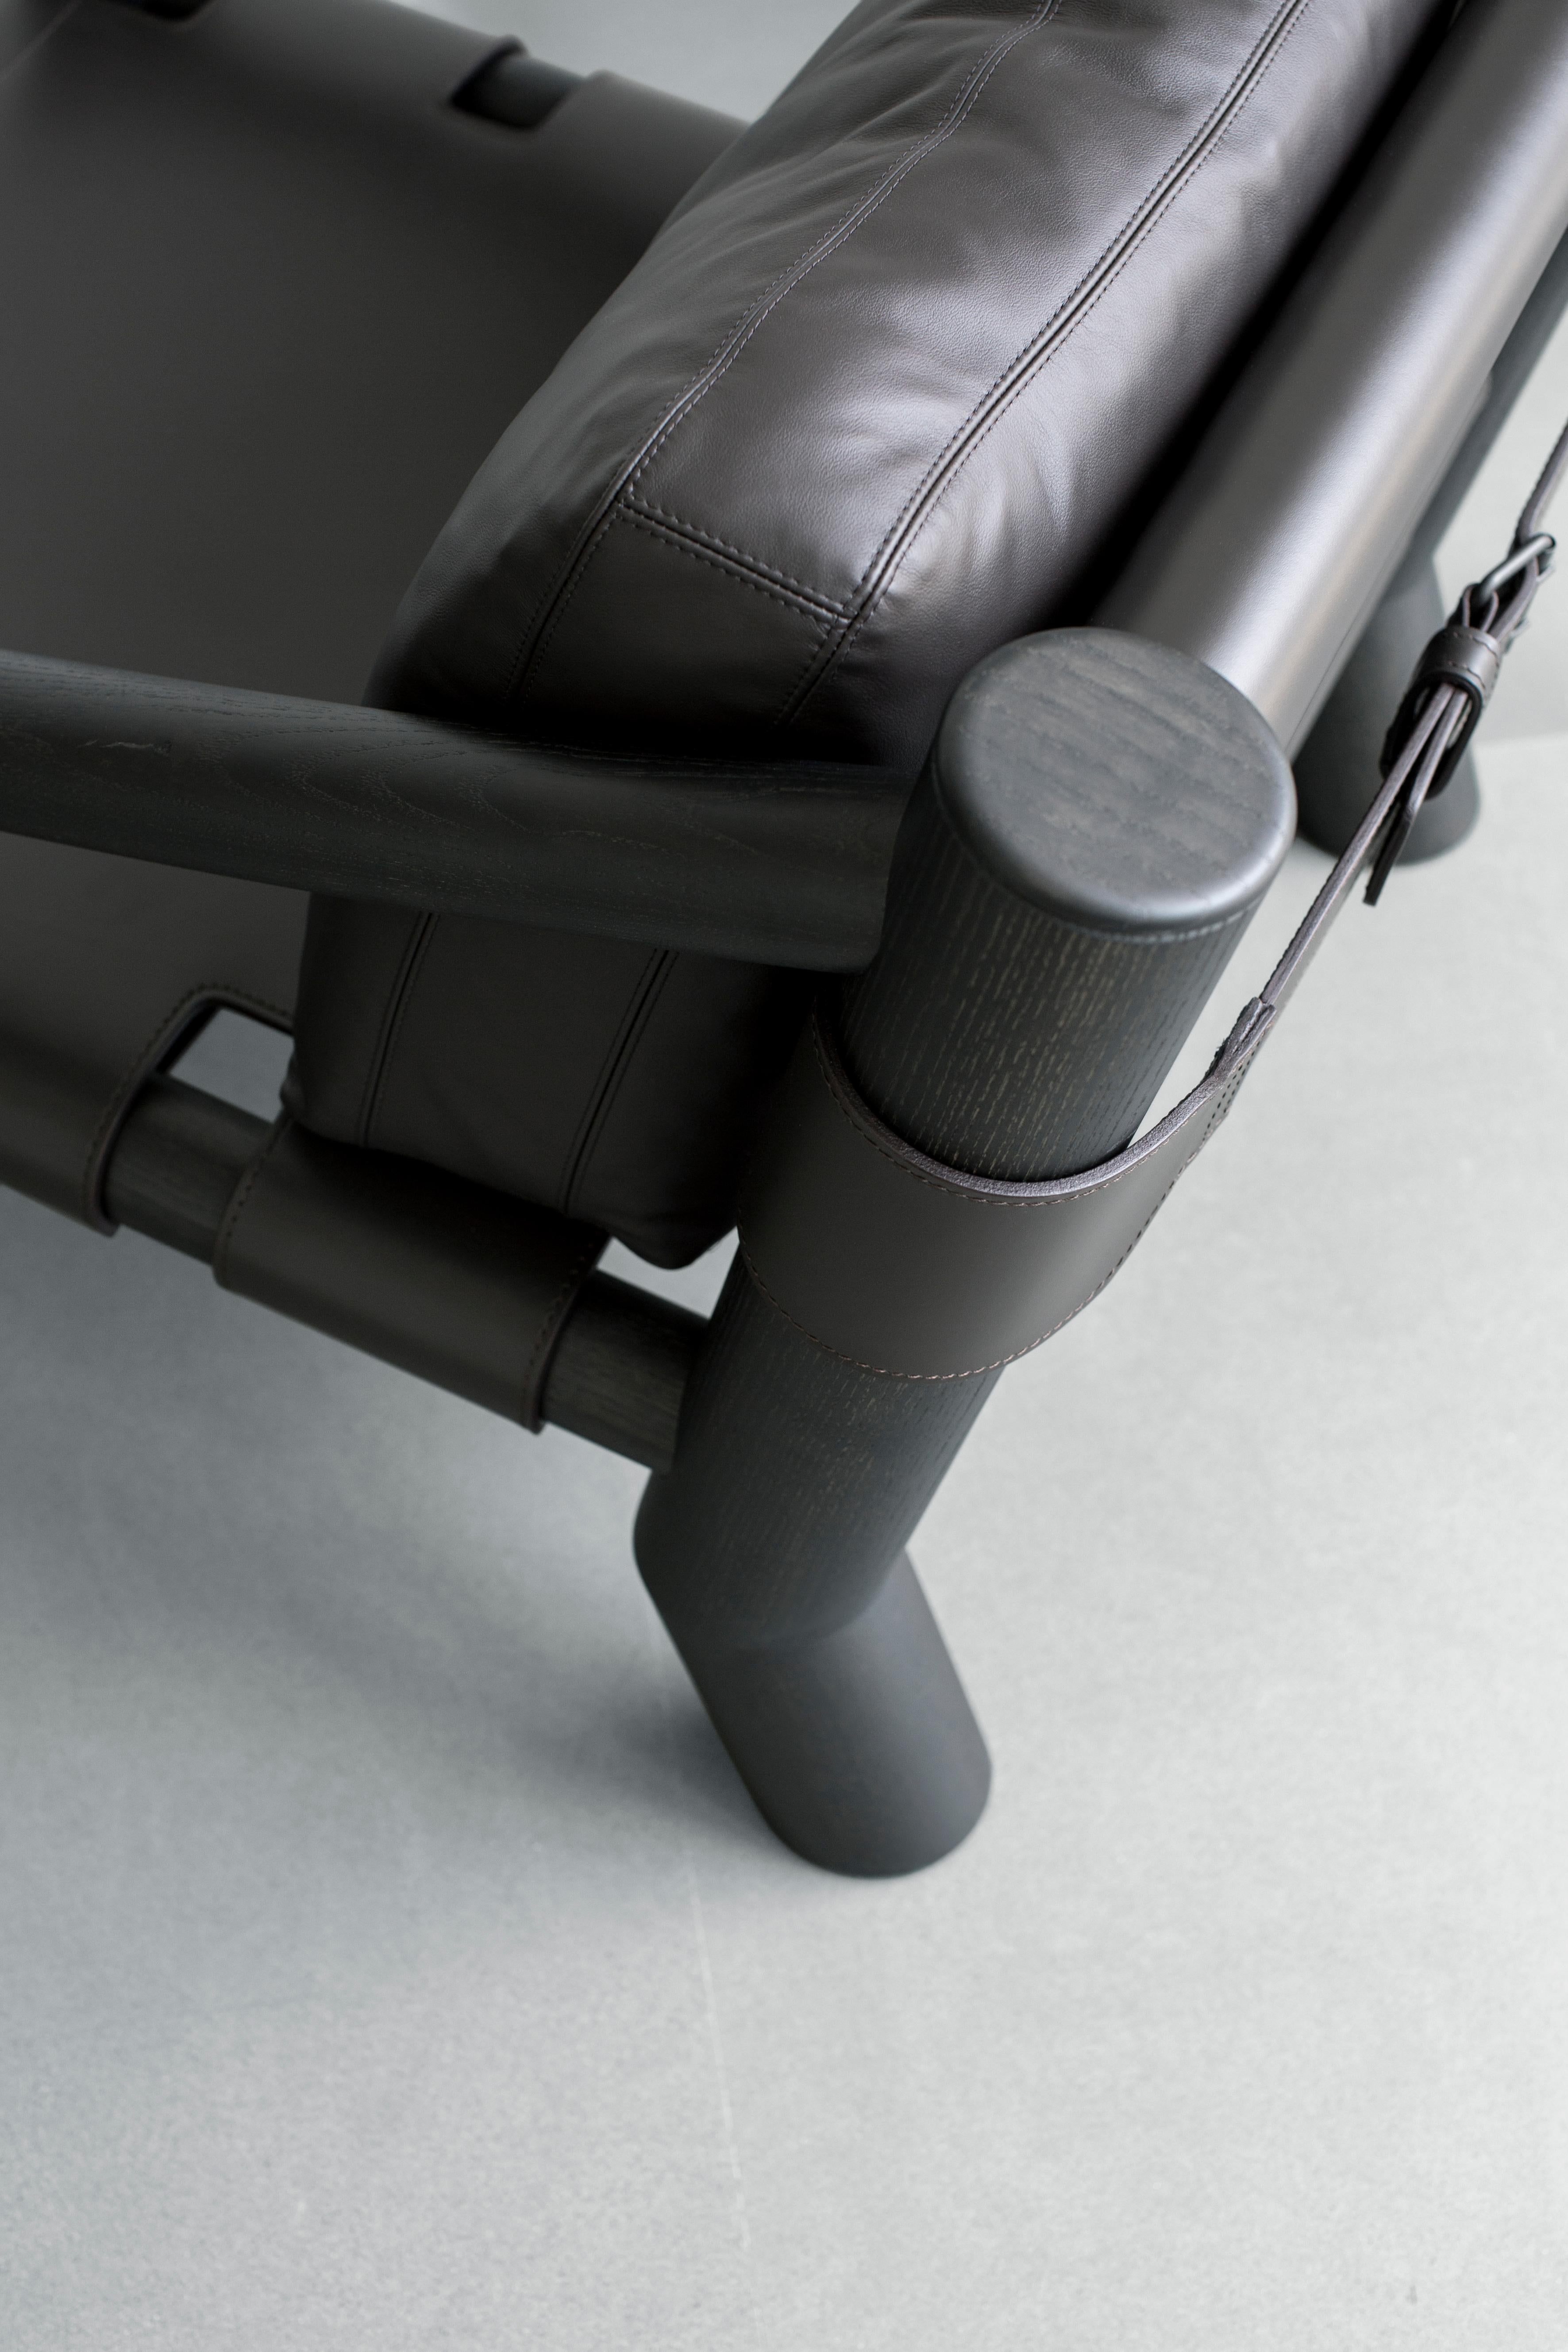 Customizable Tacchini Elephant Leather Lounge Chair by Karen Chekerdijan For Sale 3